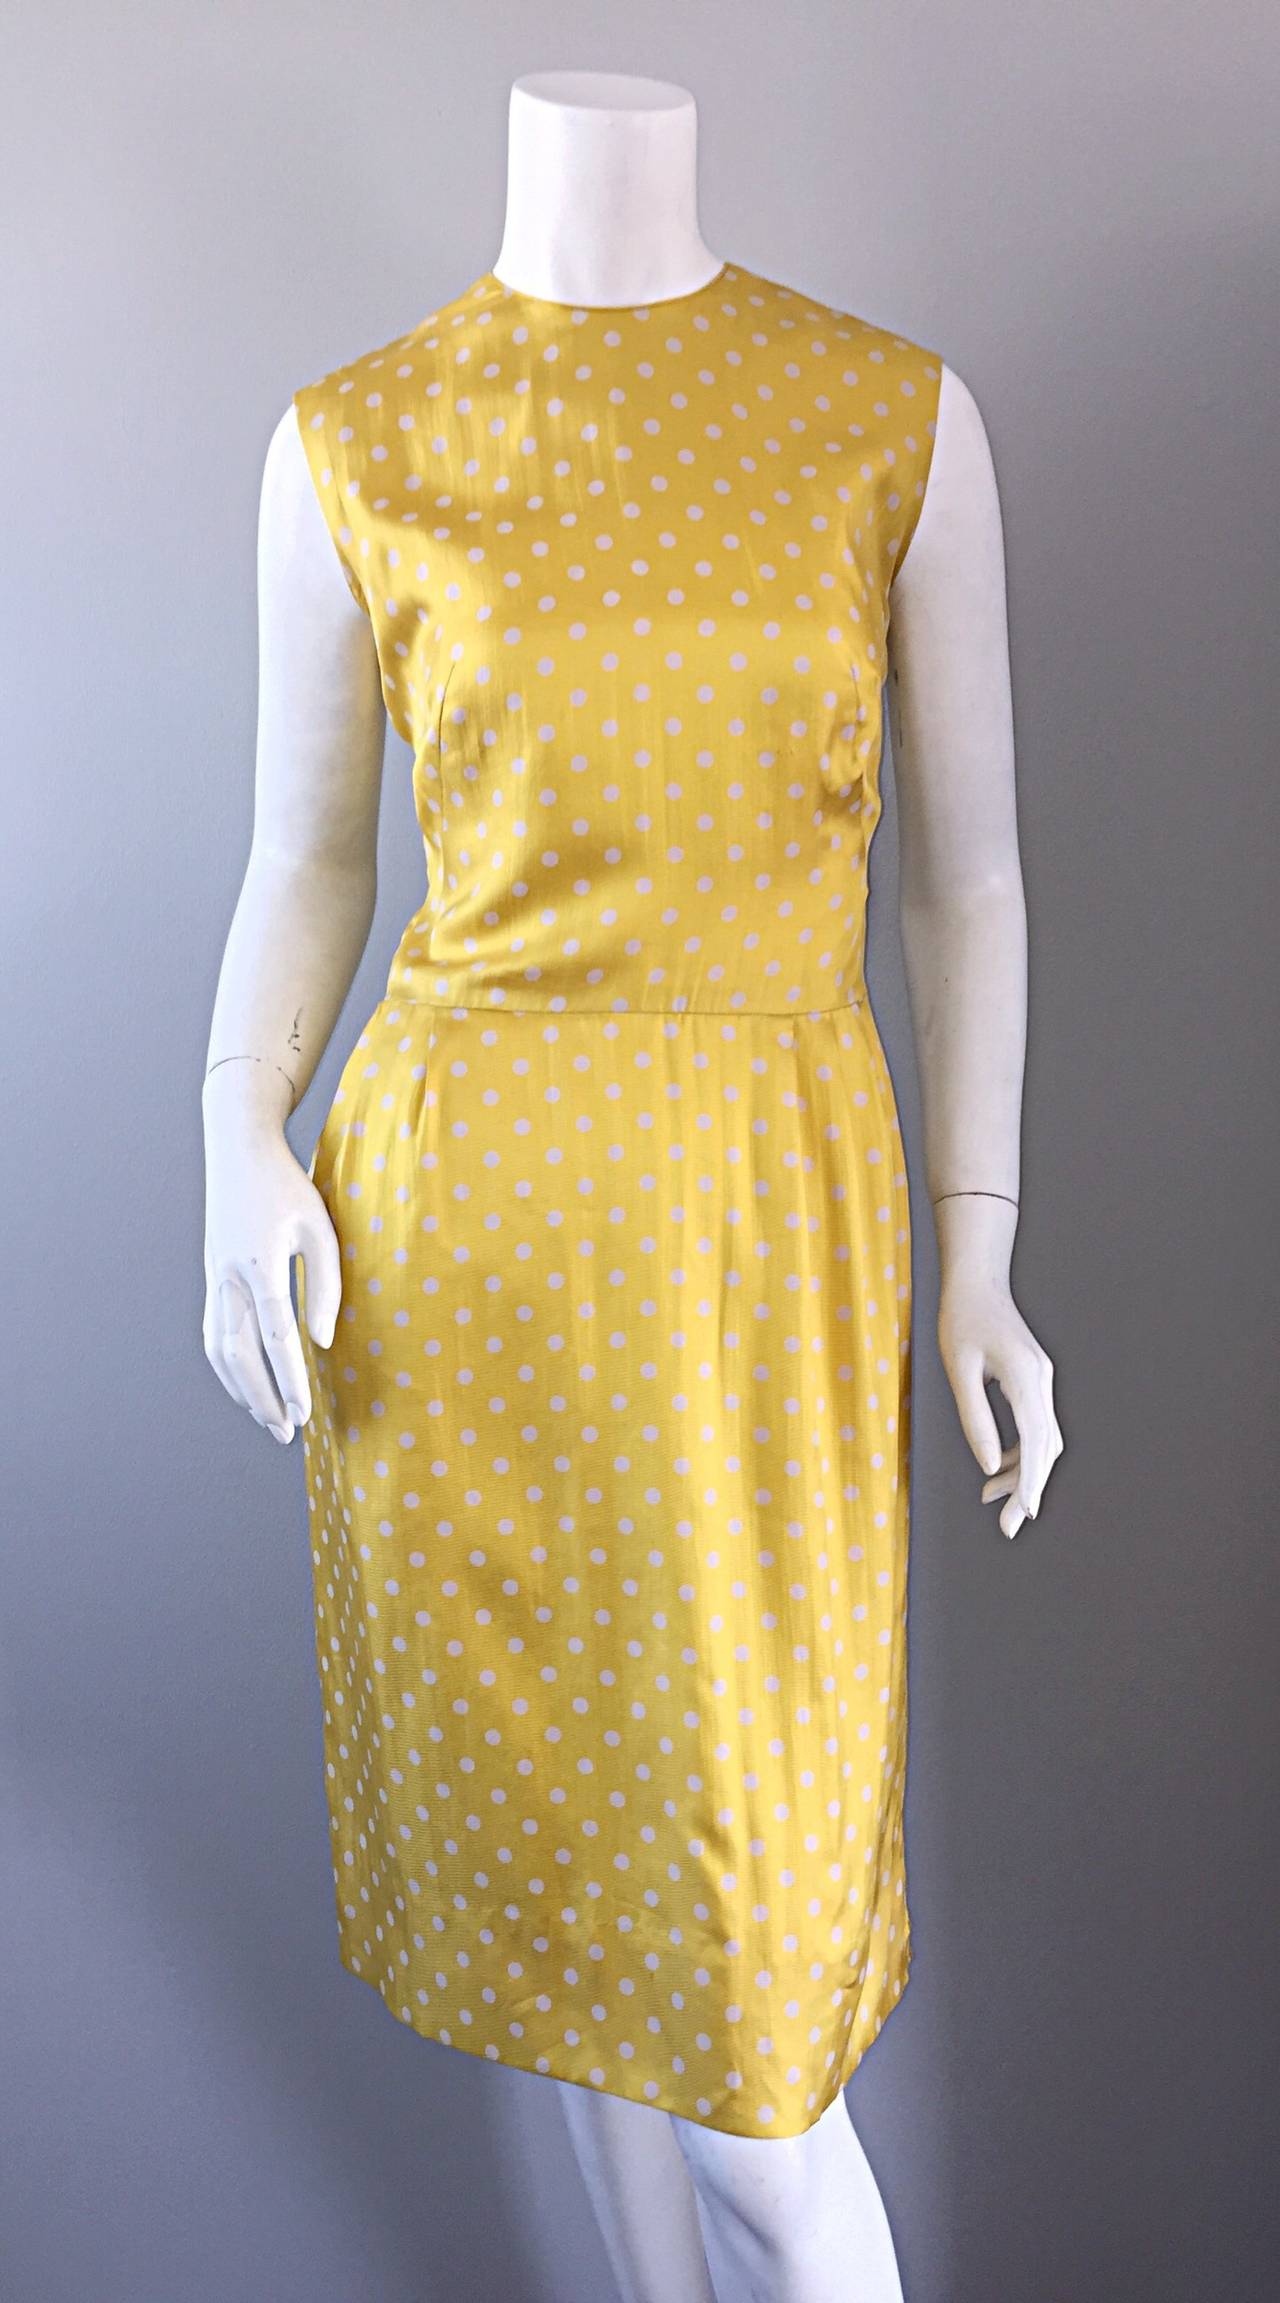 yellow 50s dress